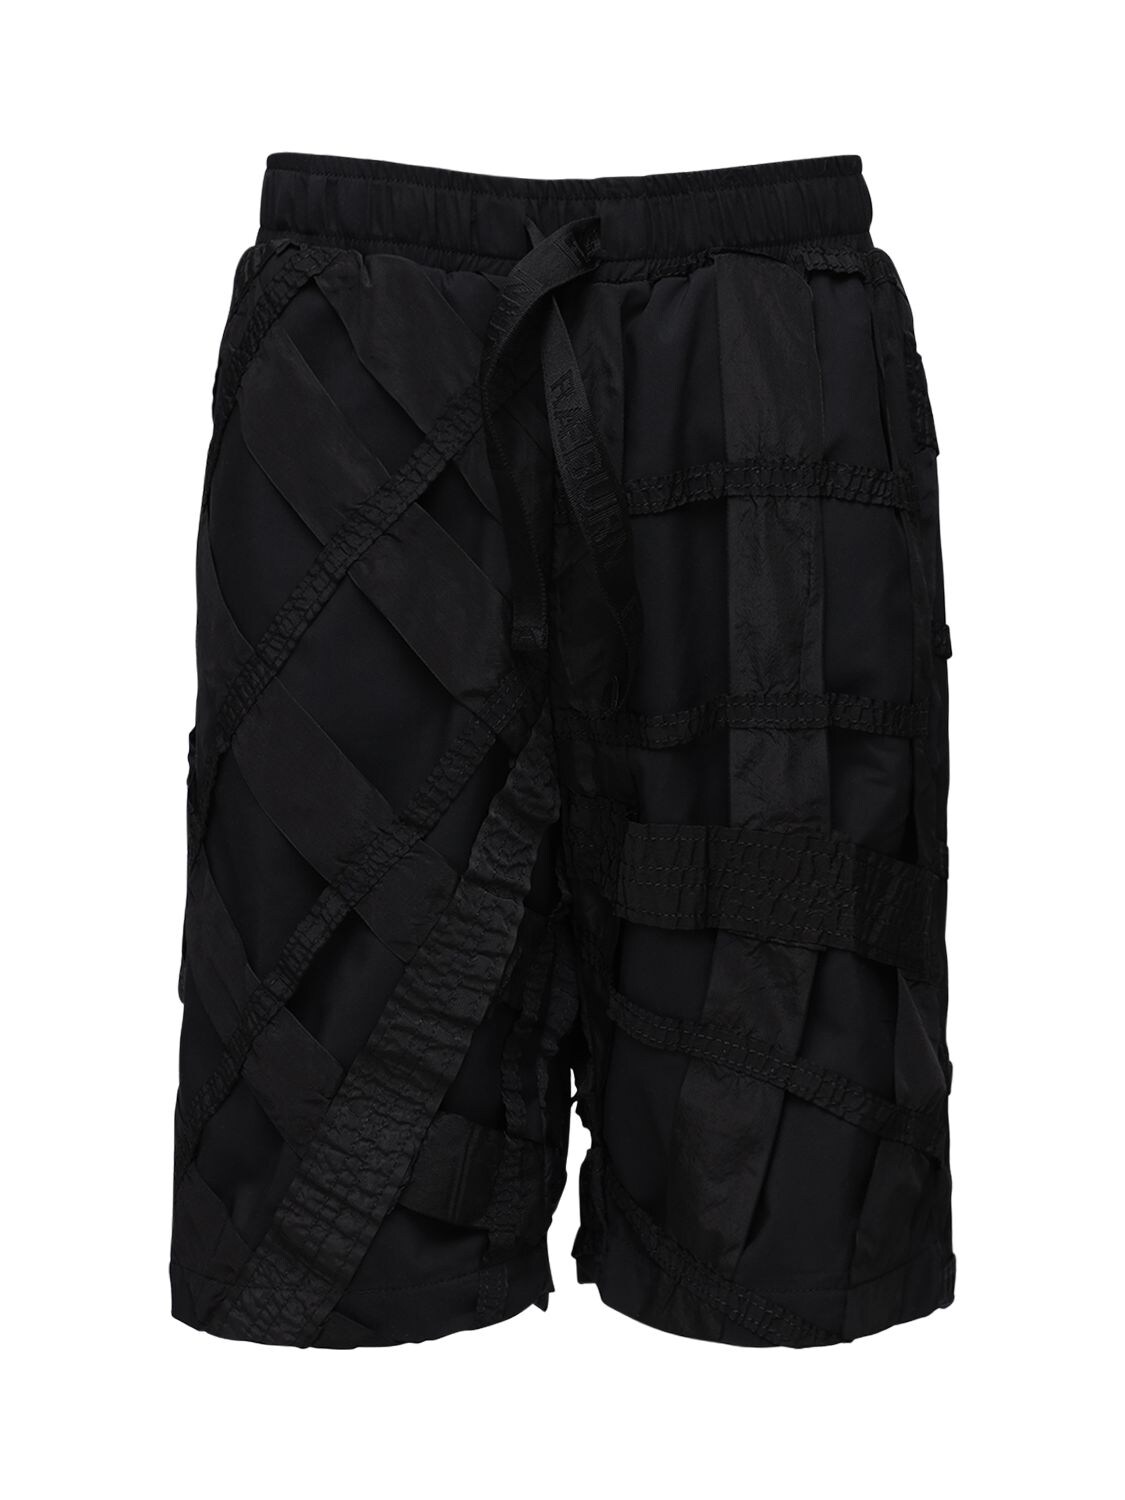 Christopher Raeburn Limited Edition Airbrake Shorts In Black